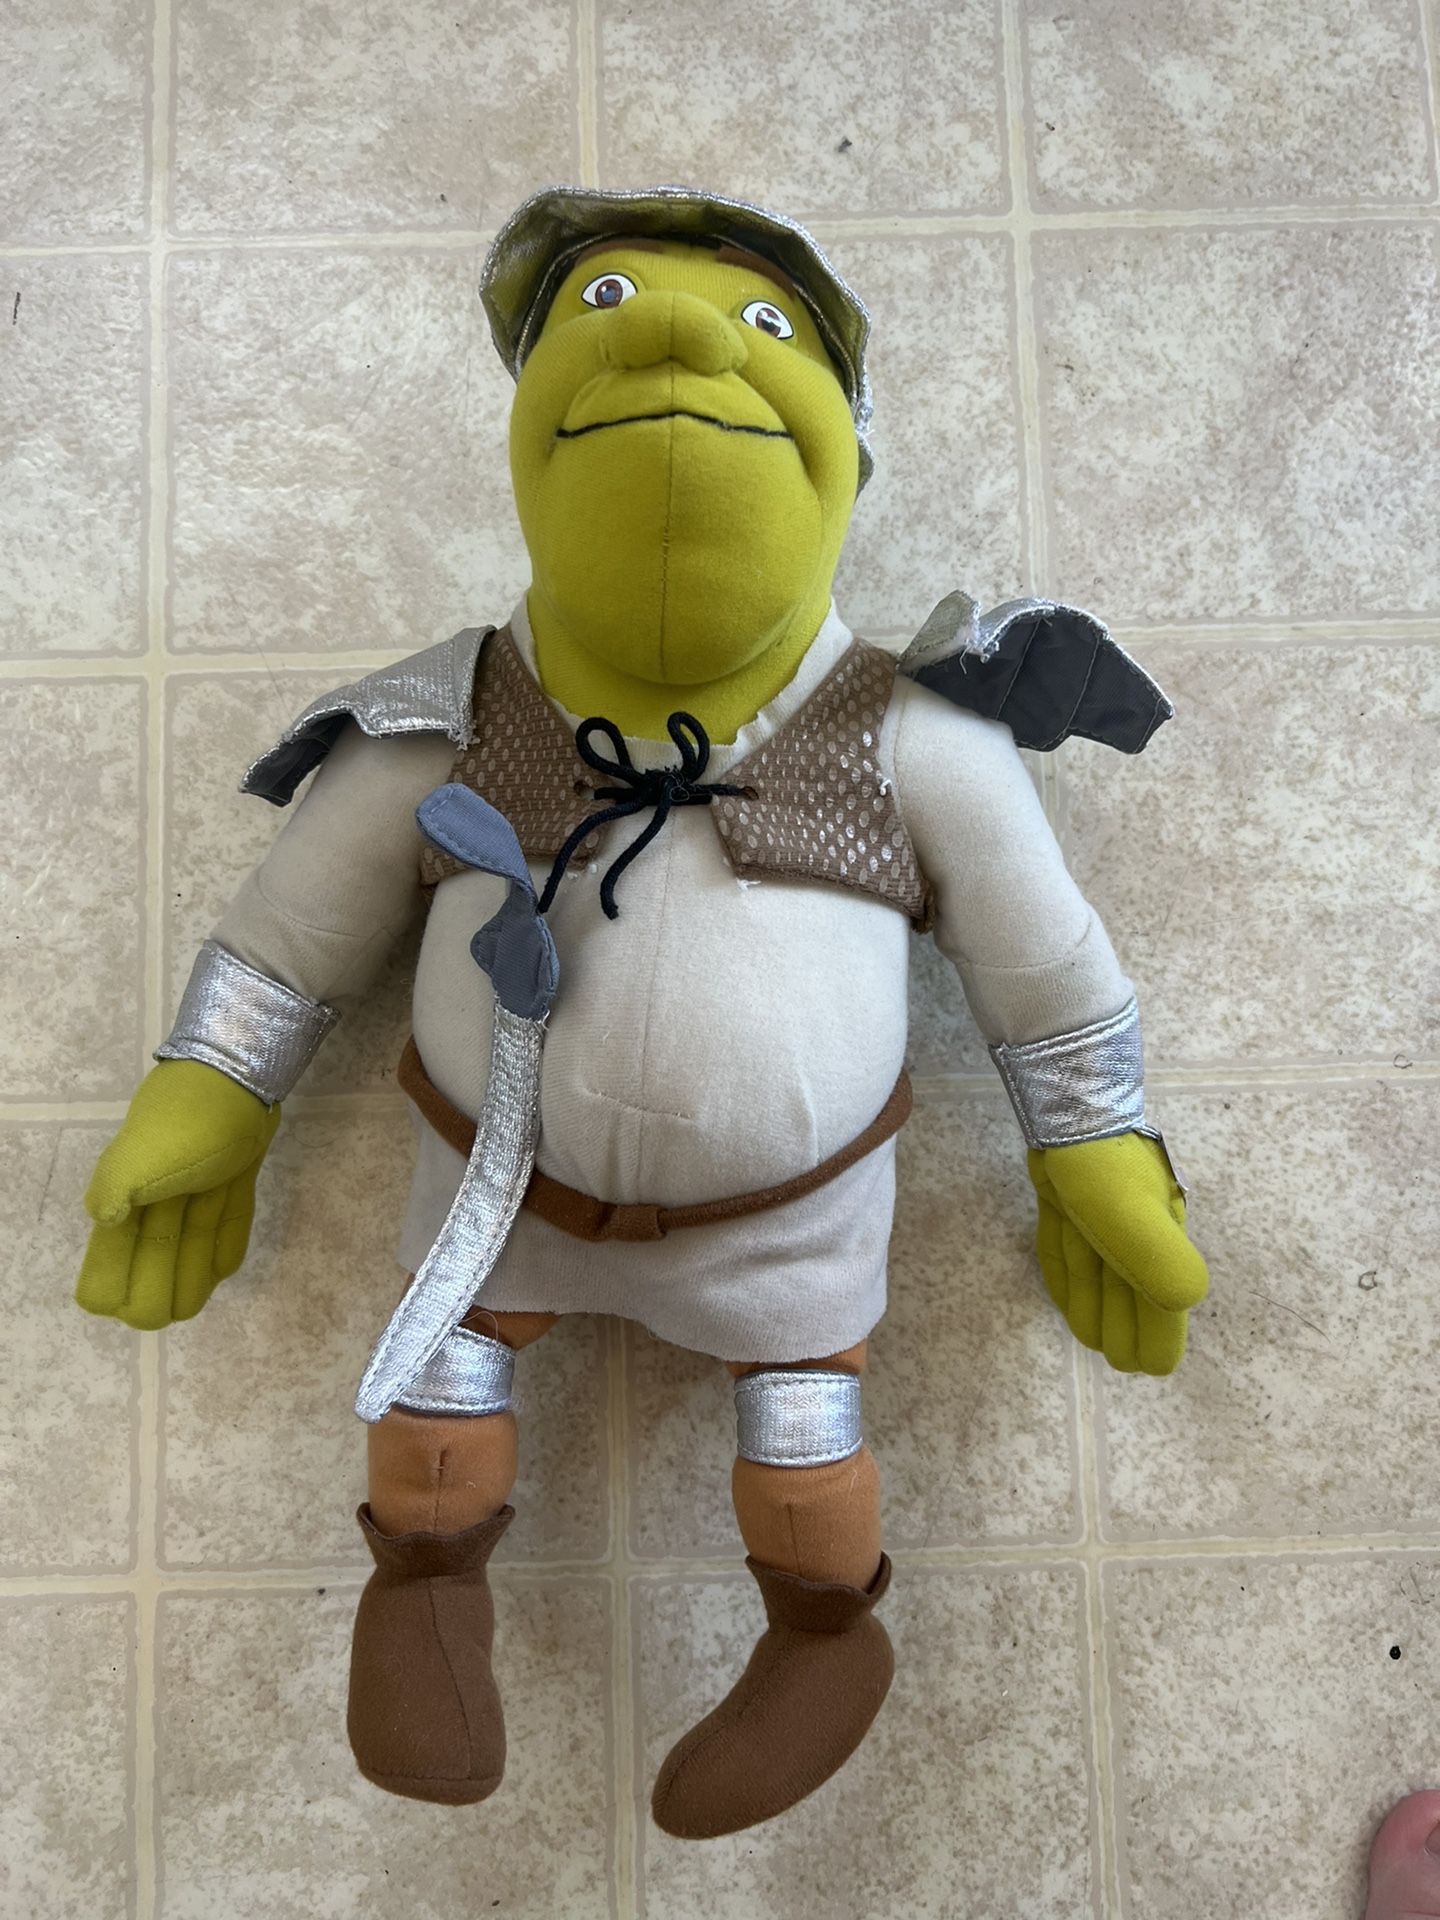 Shrek The Third Plush Toy Stuffed